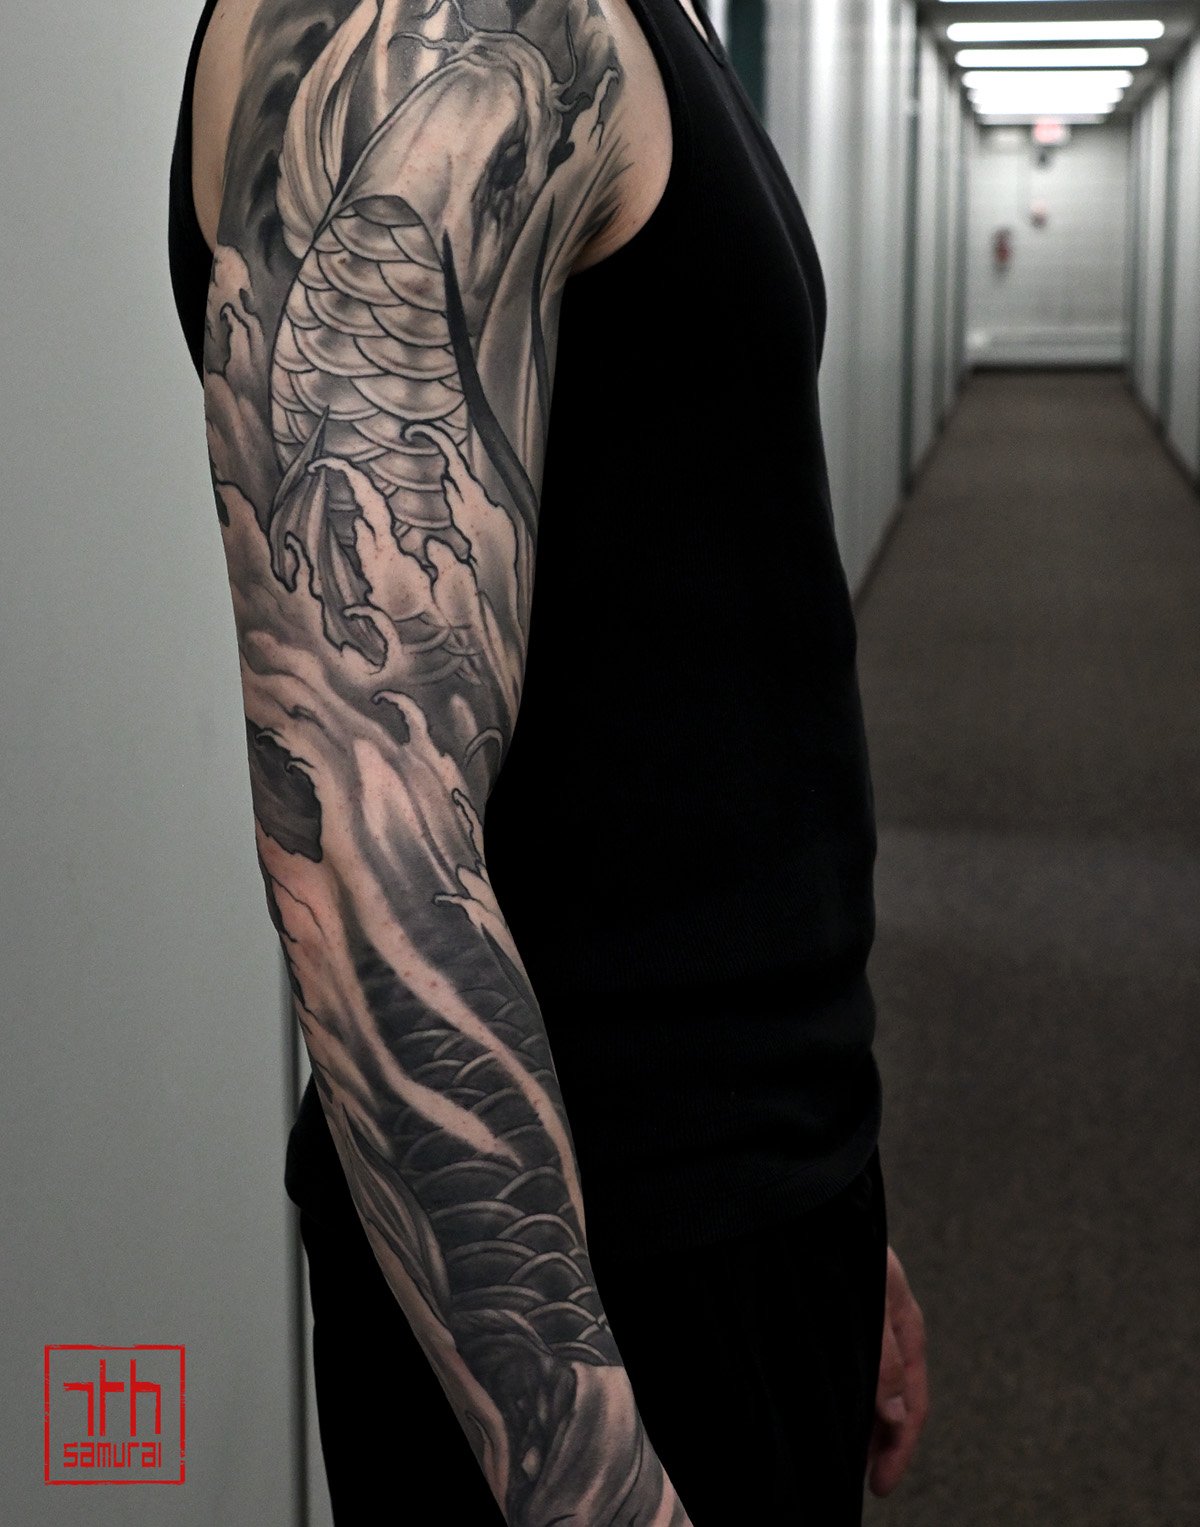 Yin Yang koi  dragon  Men's neo japanese asian arm sleeve tattoo  asian artist: Kai 7th Samurai. YEG Edmonton, Alberta, Canada 2023 best 2024